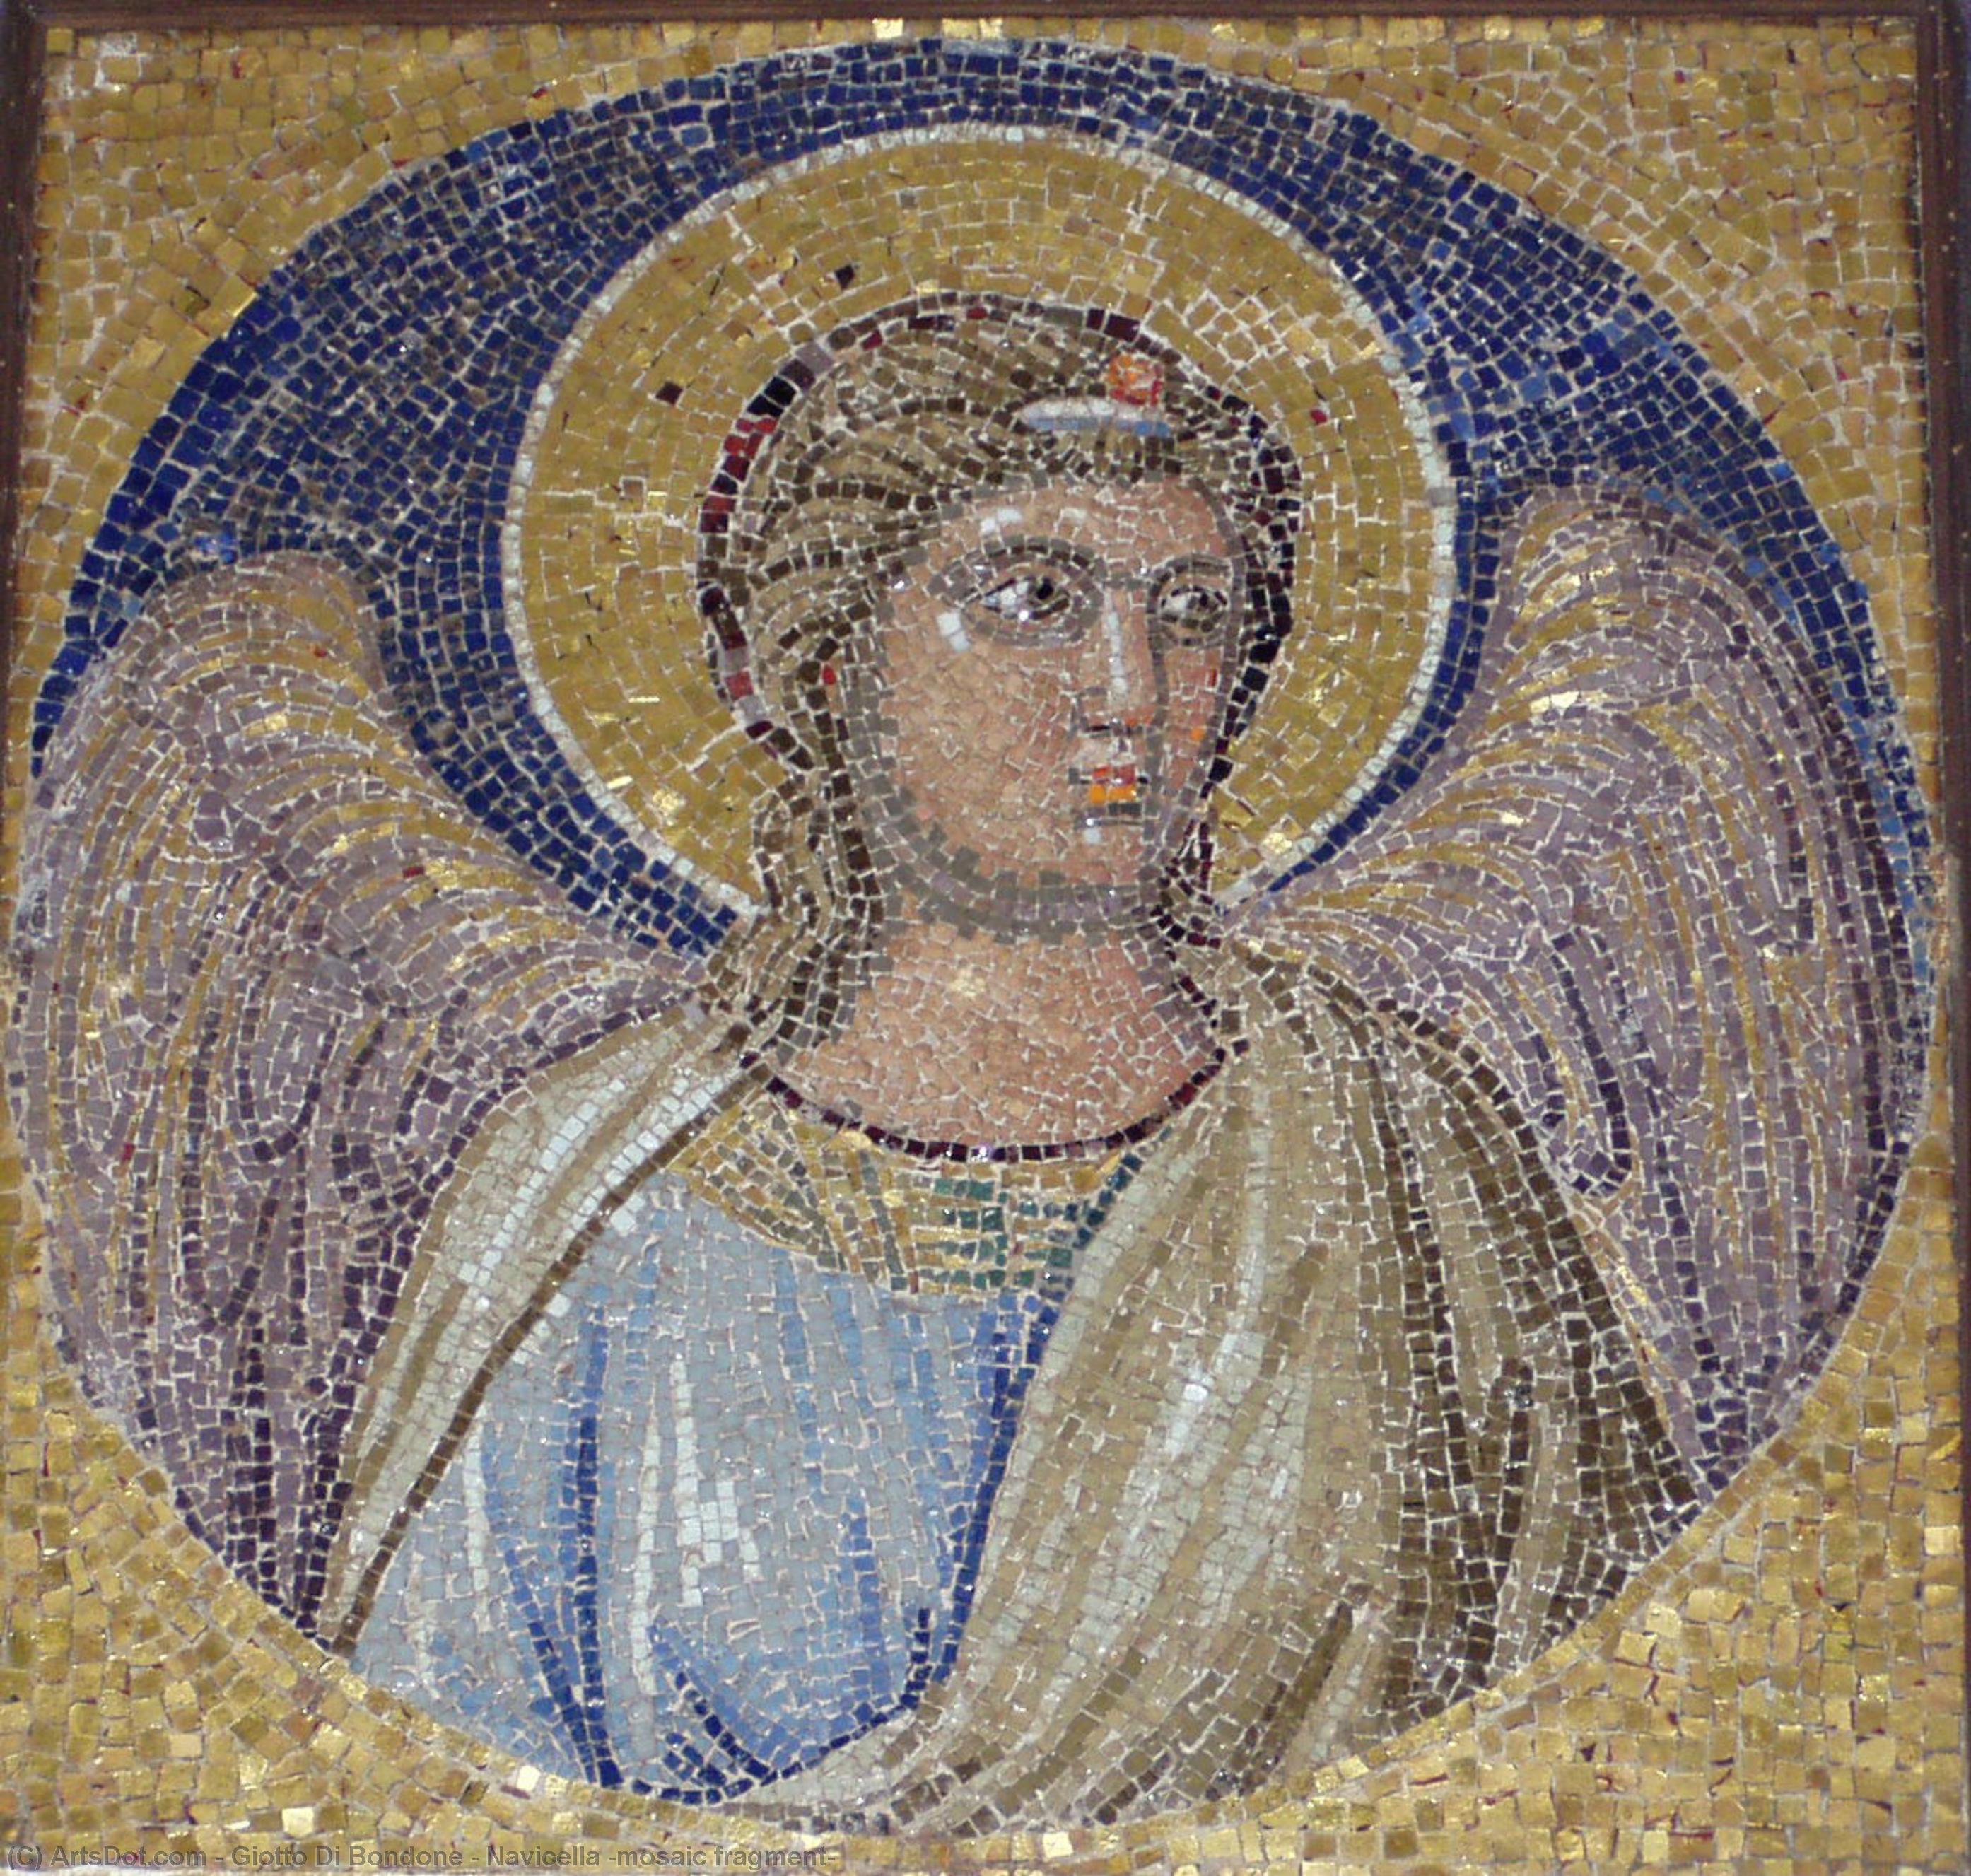 Wikoo.org - موسوعة الفنون الجميلة - اللوحة، العمل الفني Giotto Di Bondone - Navicella (mosaic fragment)